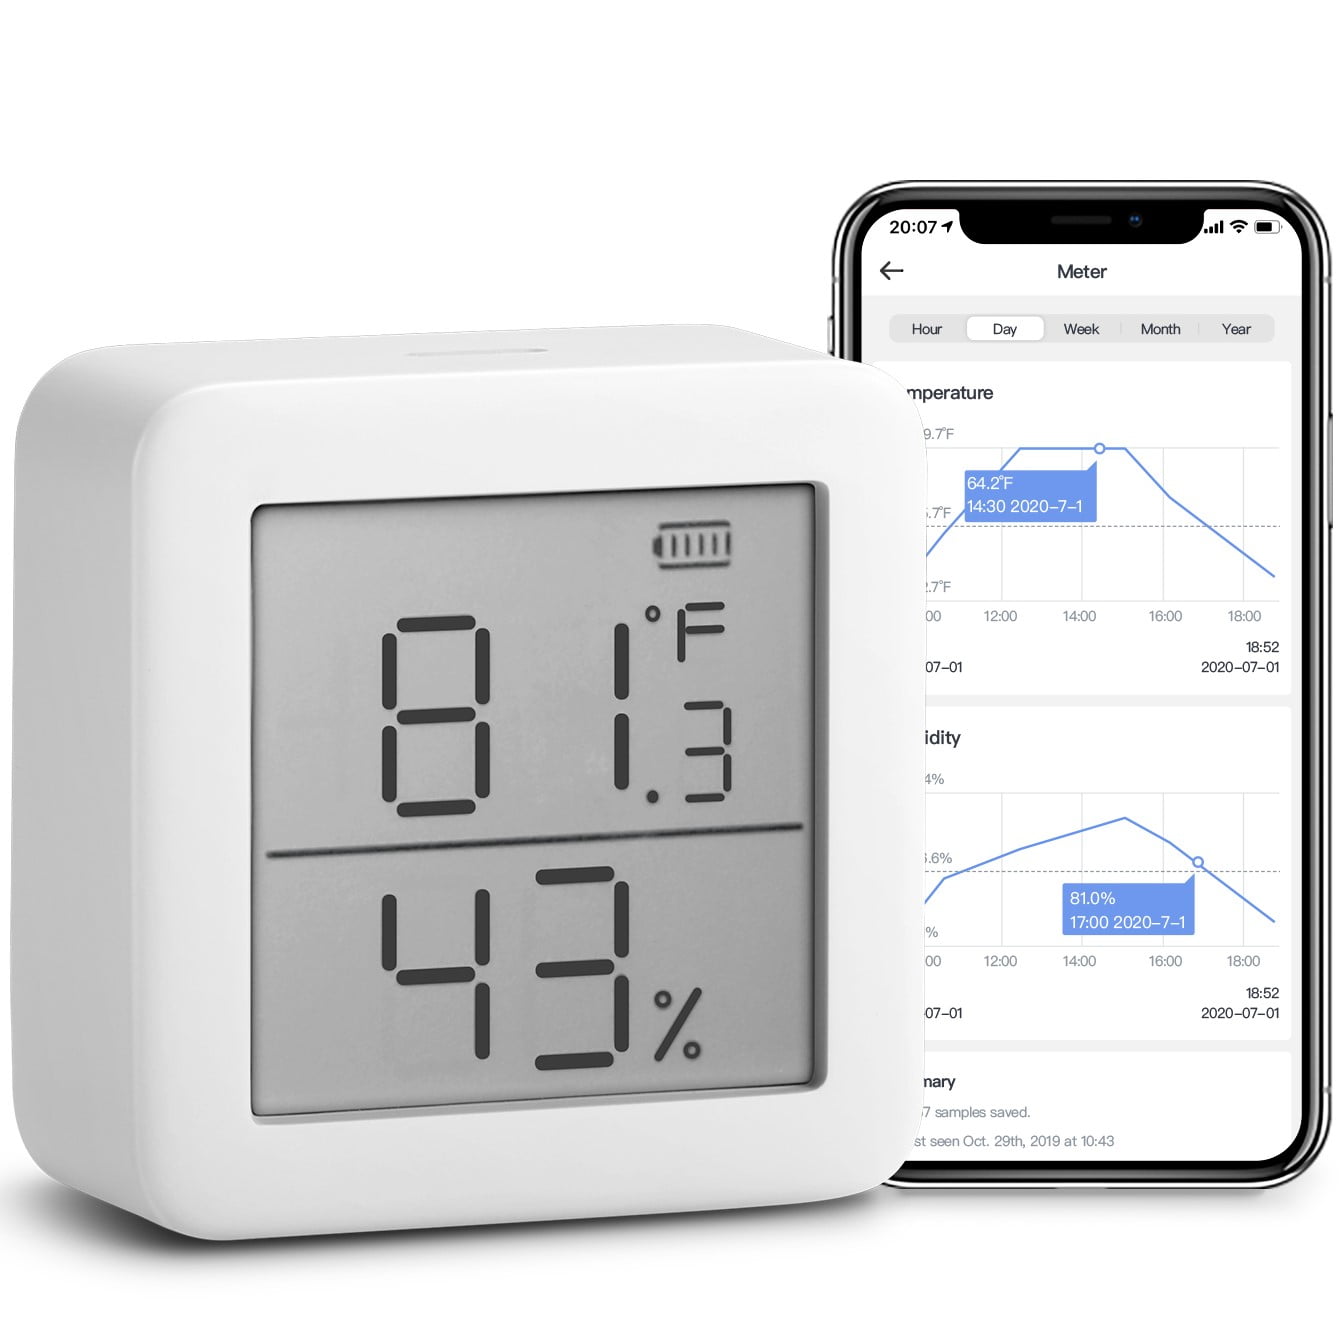 Wireless Thermometer Hygrometer Sensor Data Logger Digital C/F Indoor  Outdoor 50m Wireless Range Bluetooth Temperature Humidity Meter Alarm